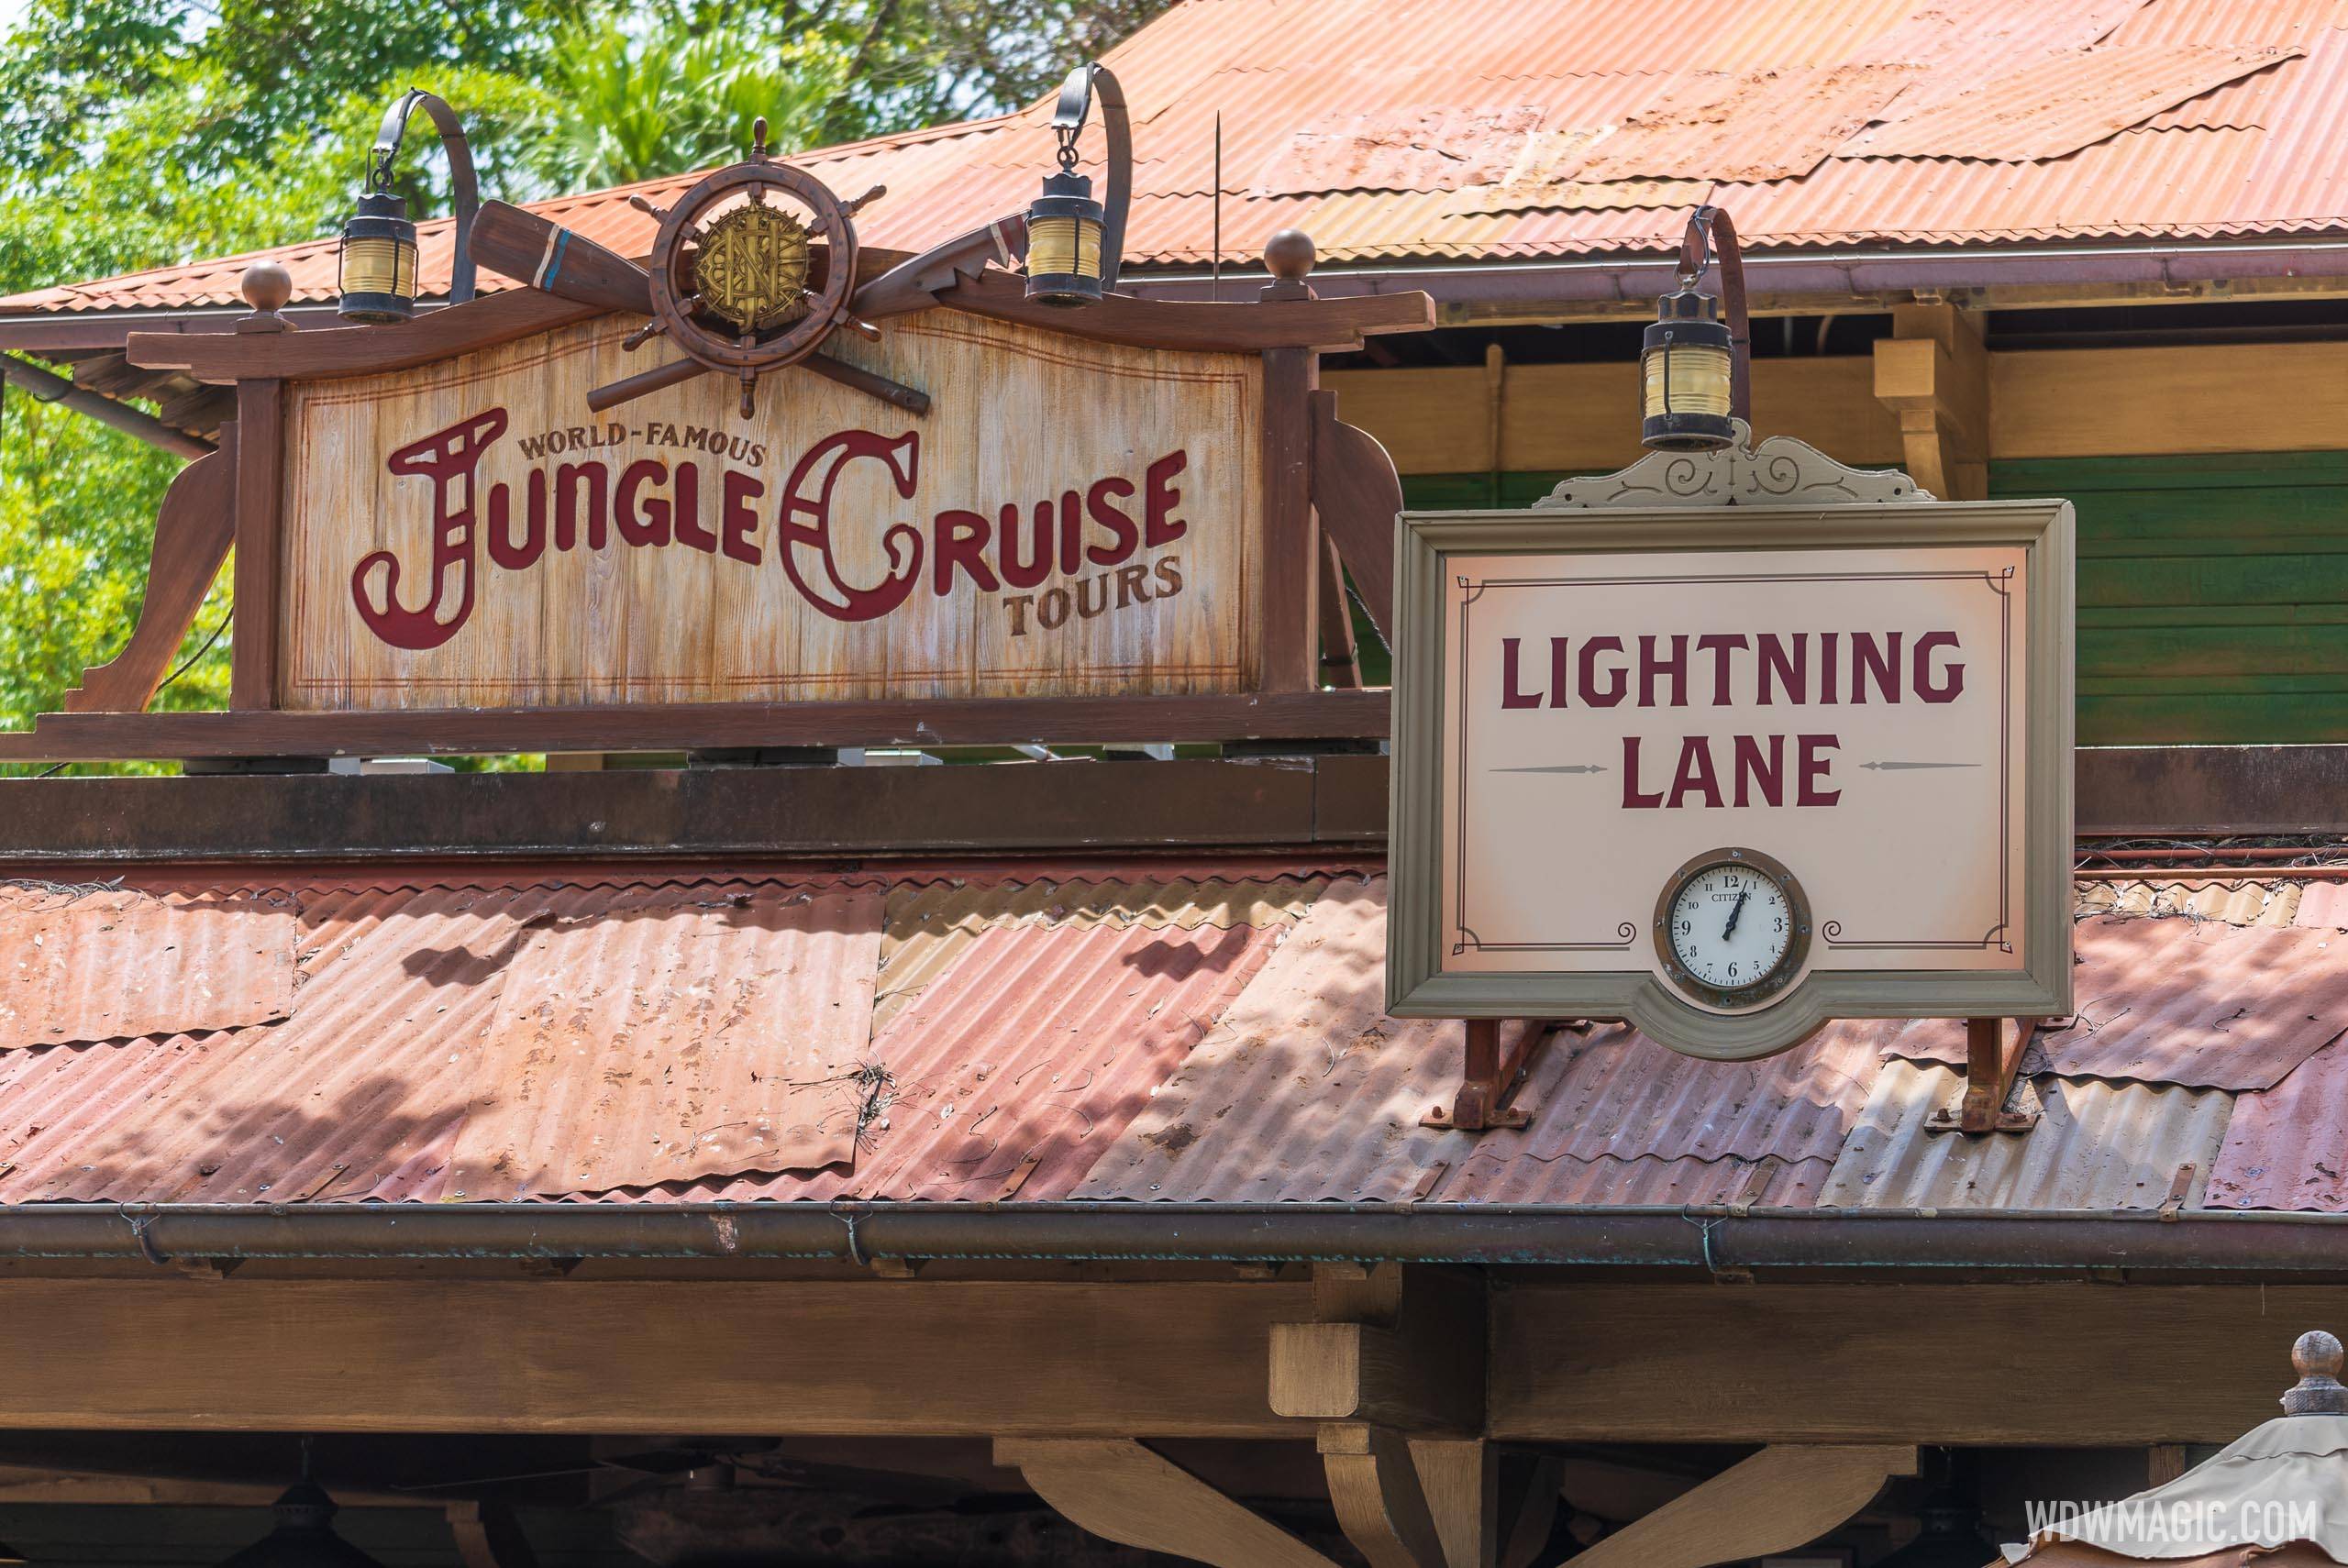 Lightning Lane signs at Magic Kingdom